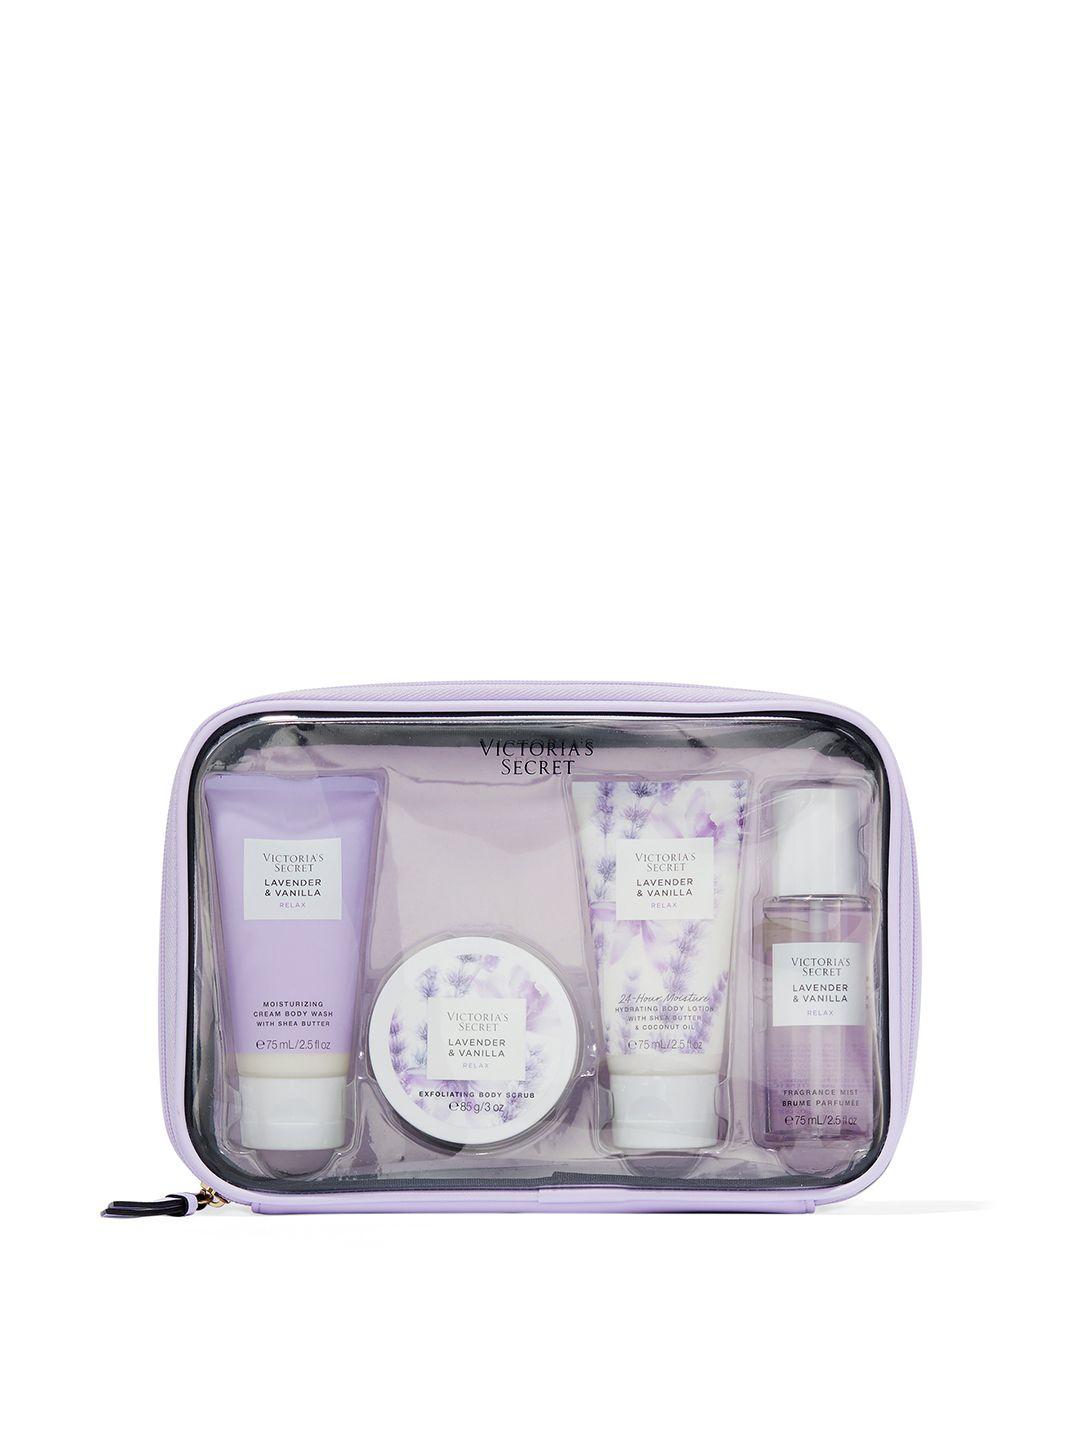 victoria's secret lavender vanilla relax natural beauty ritual kit